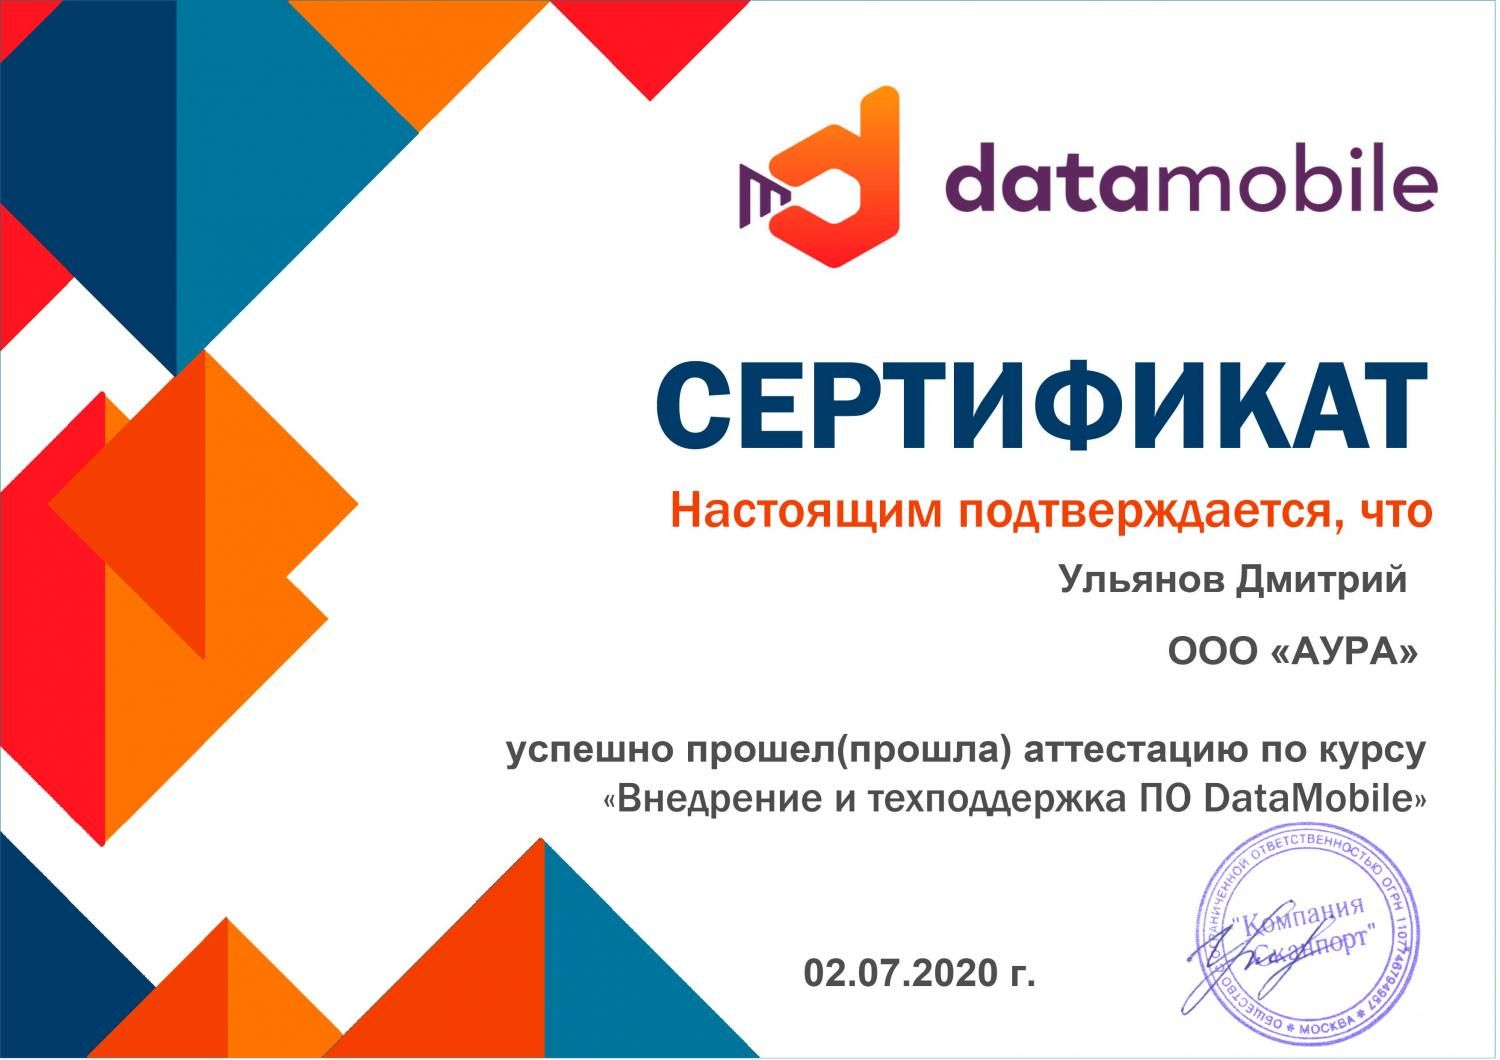 Сертификат от DataMobile